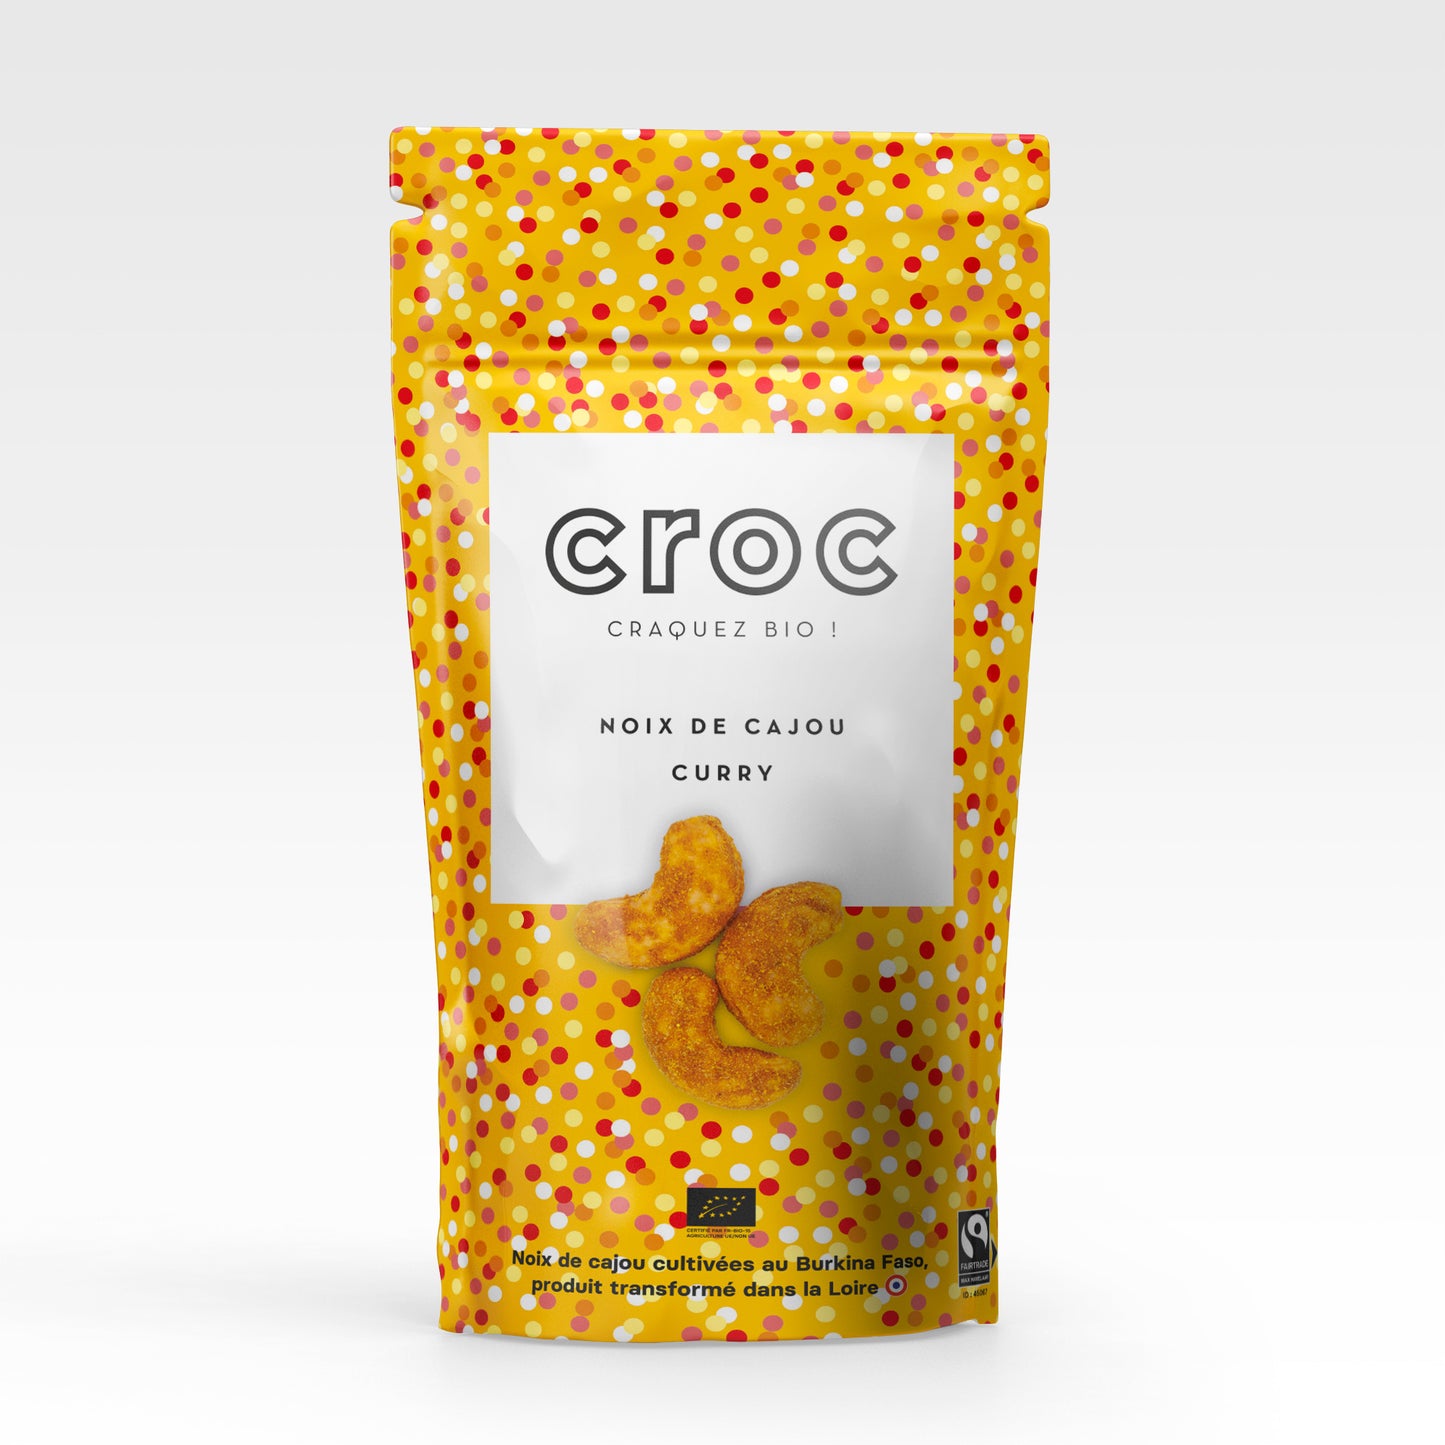 Croc -- Noix de cajou et curry bio (burkina faso) - 110 g